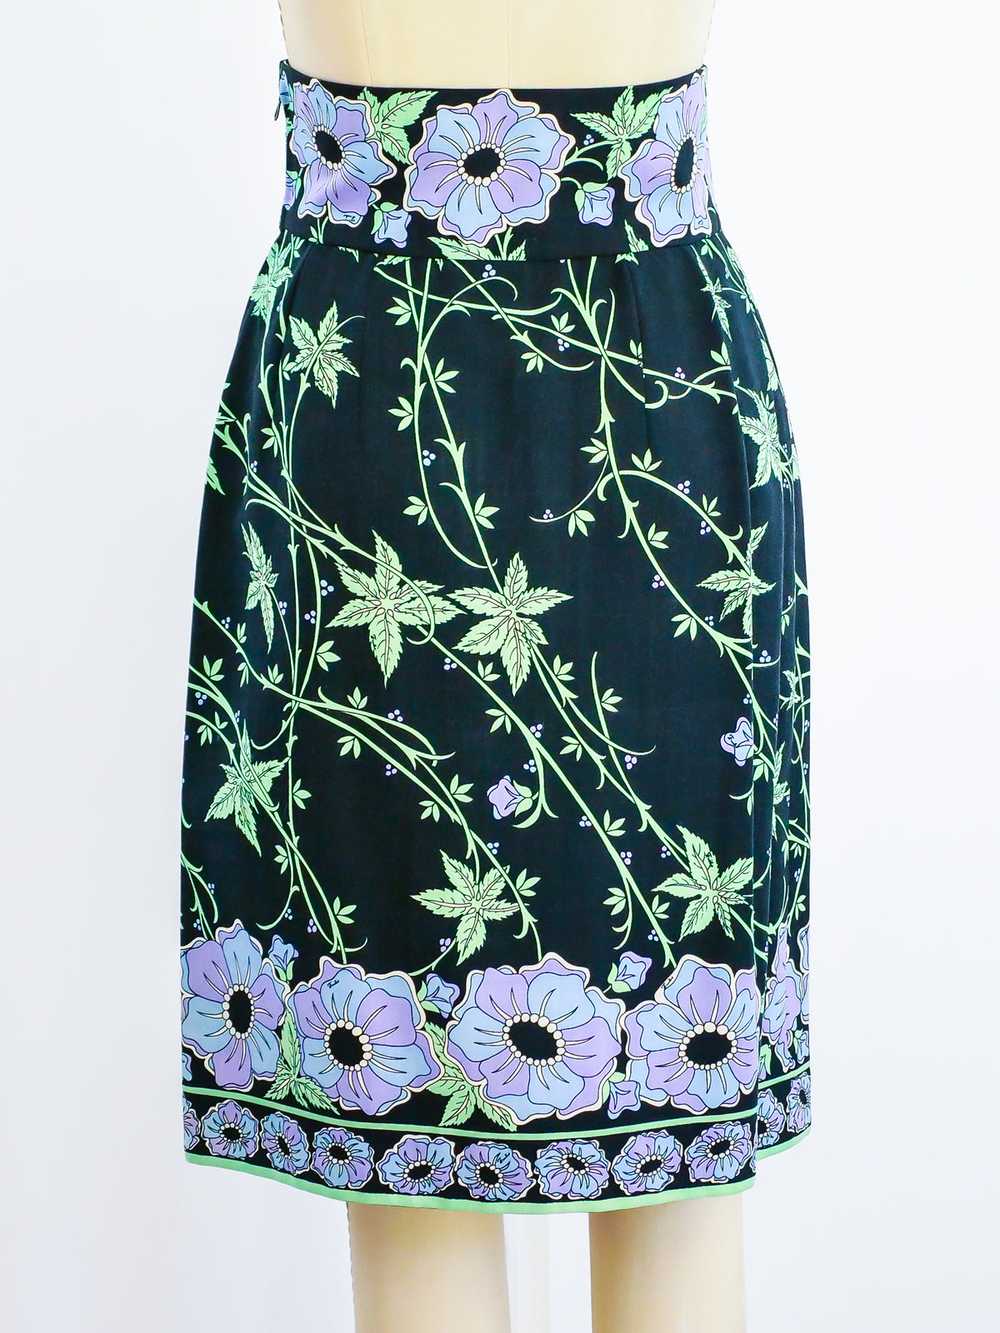 Emilio Pucci Printed Skirt - image 3